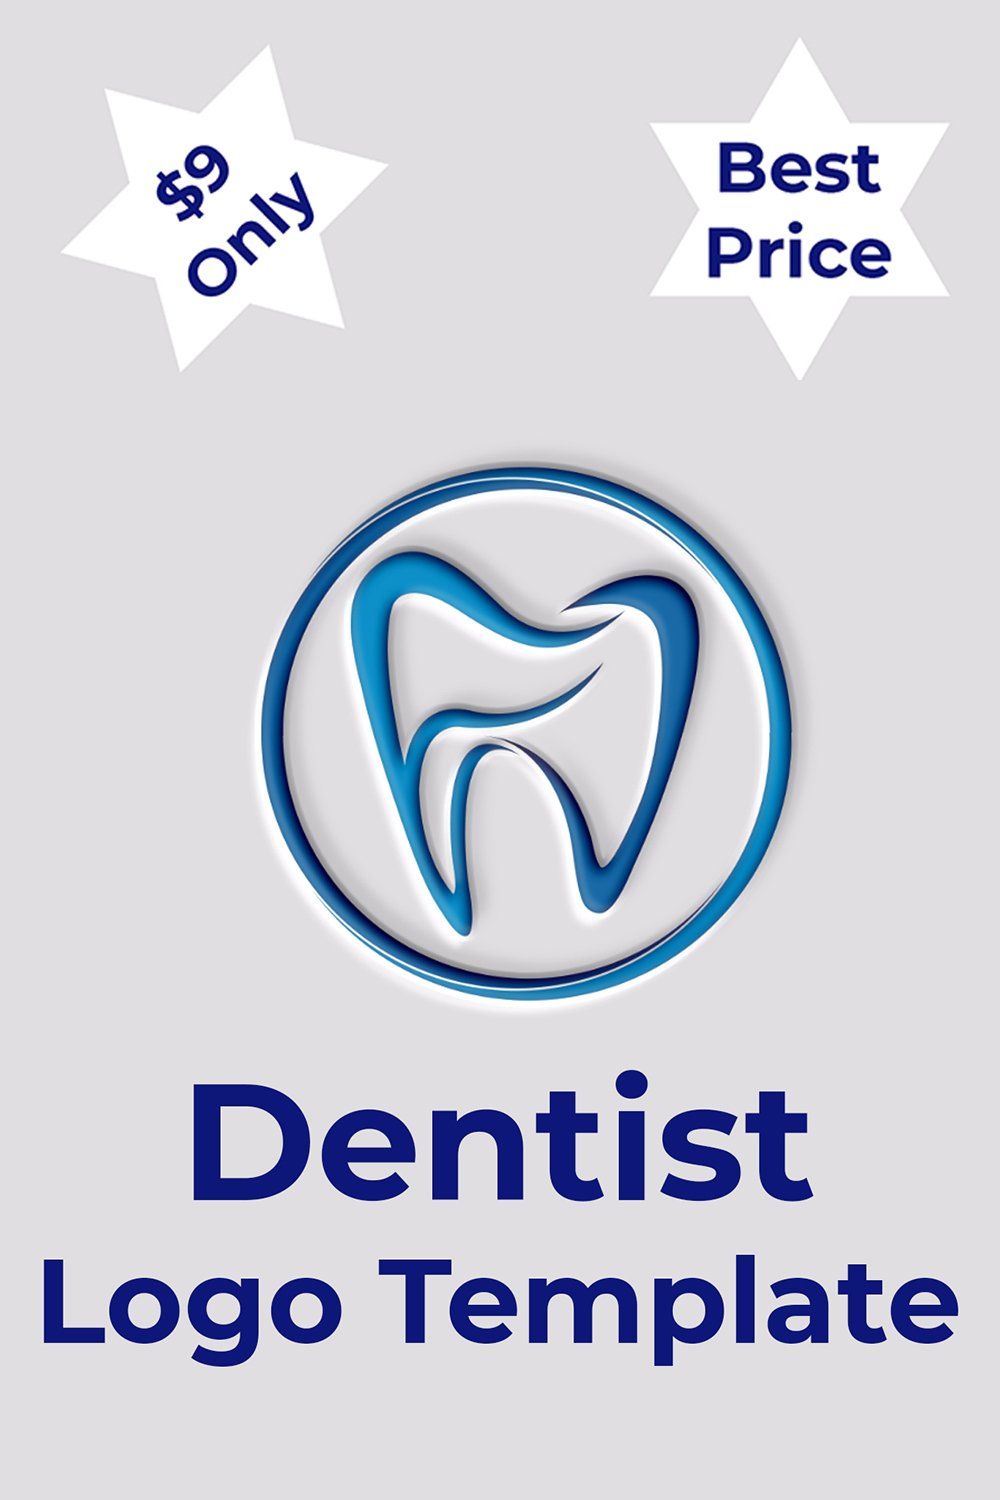 Dentist Logo Design Template pinterest image.